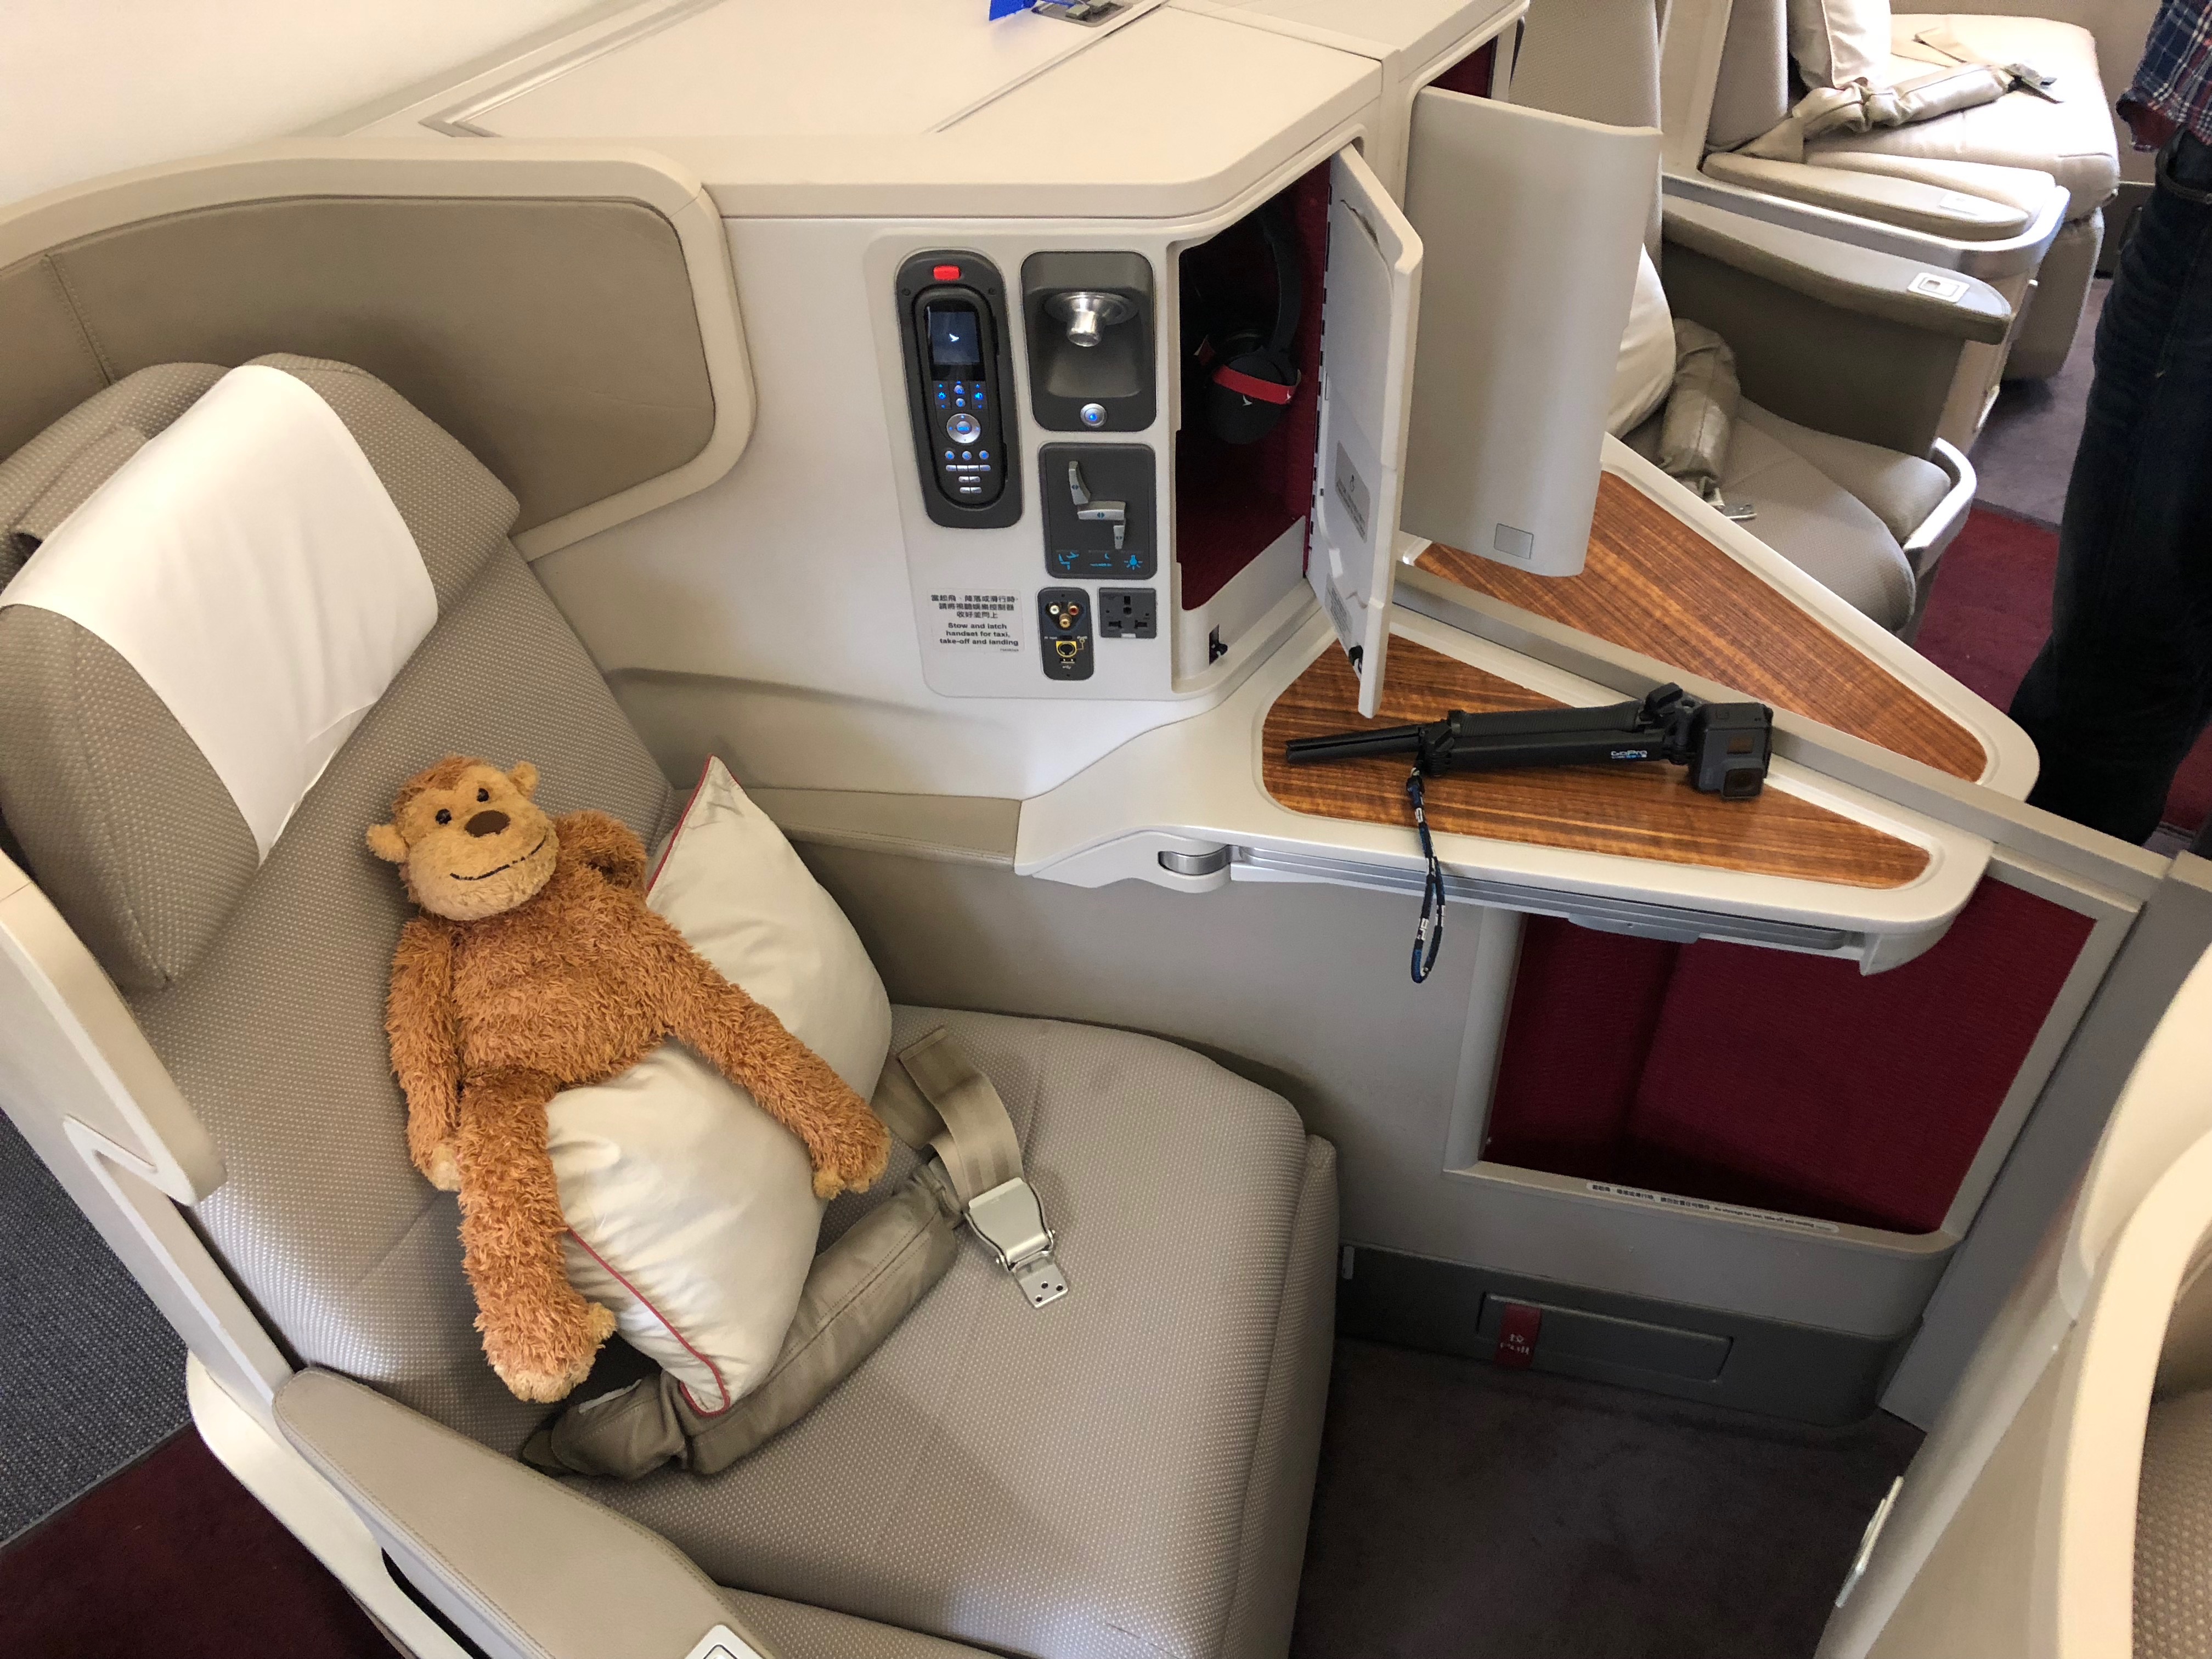 a stuffed animal on a seat